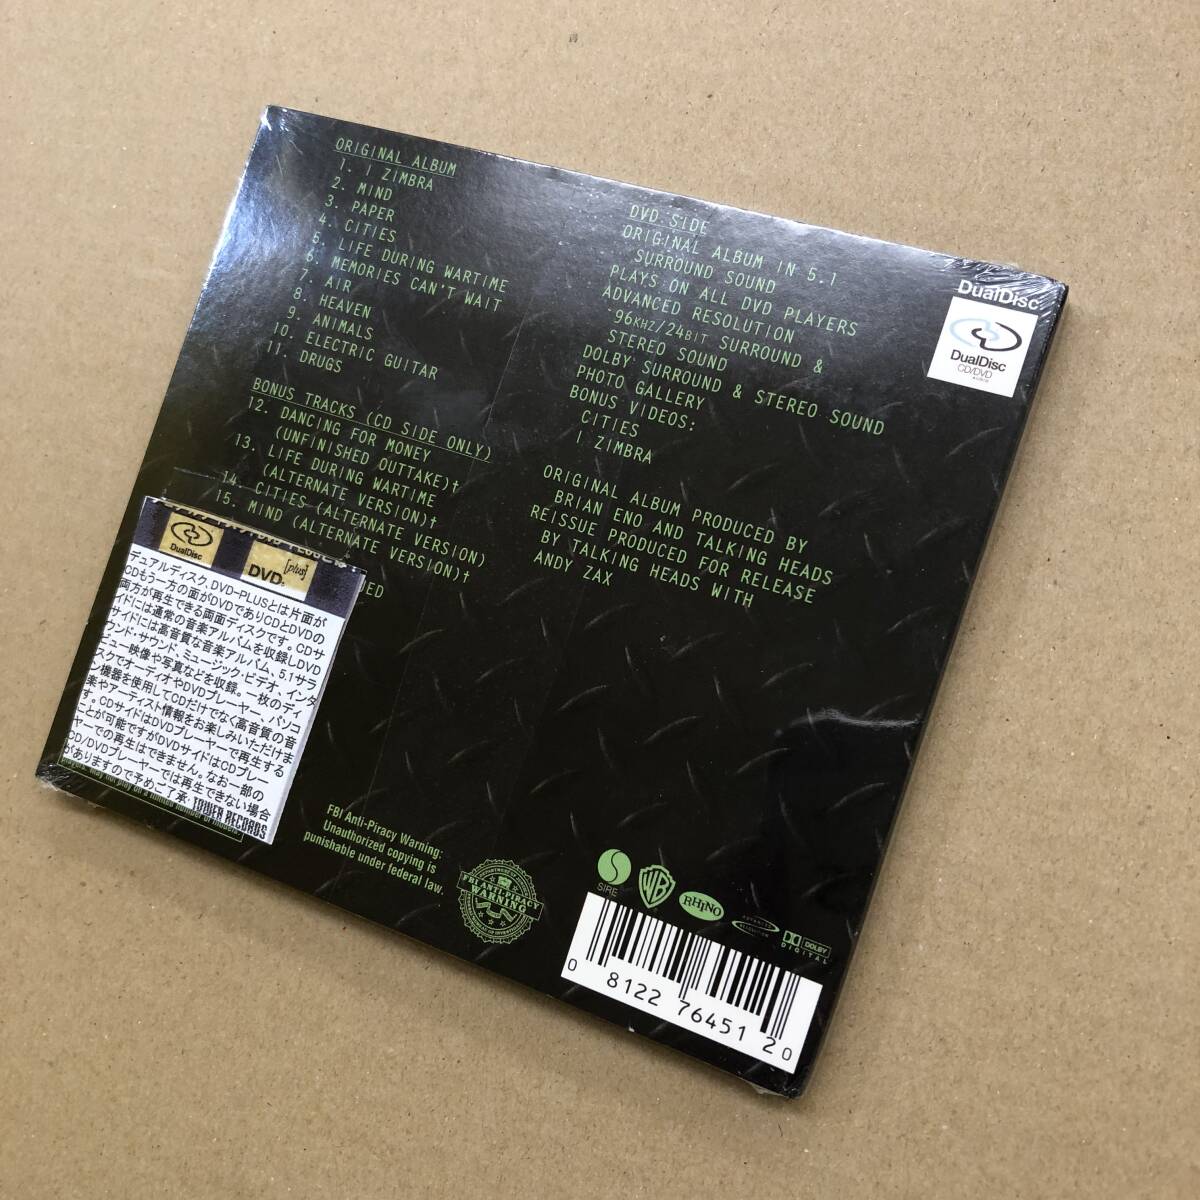 (CD) Talking Heads - Fear Of Music[R2 76451] зарубежная запись DualDiscto- King *hez-fia*ob* музыка нераспечатанный 